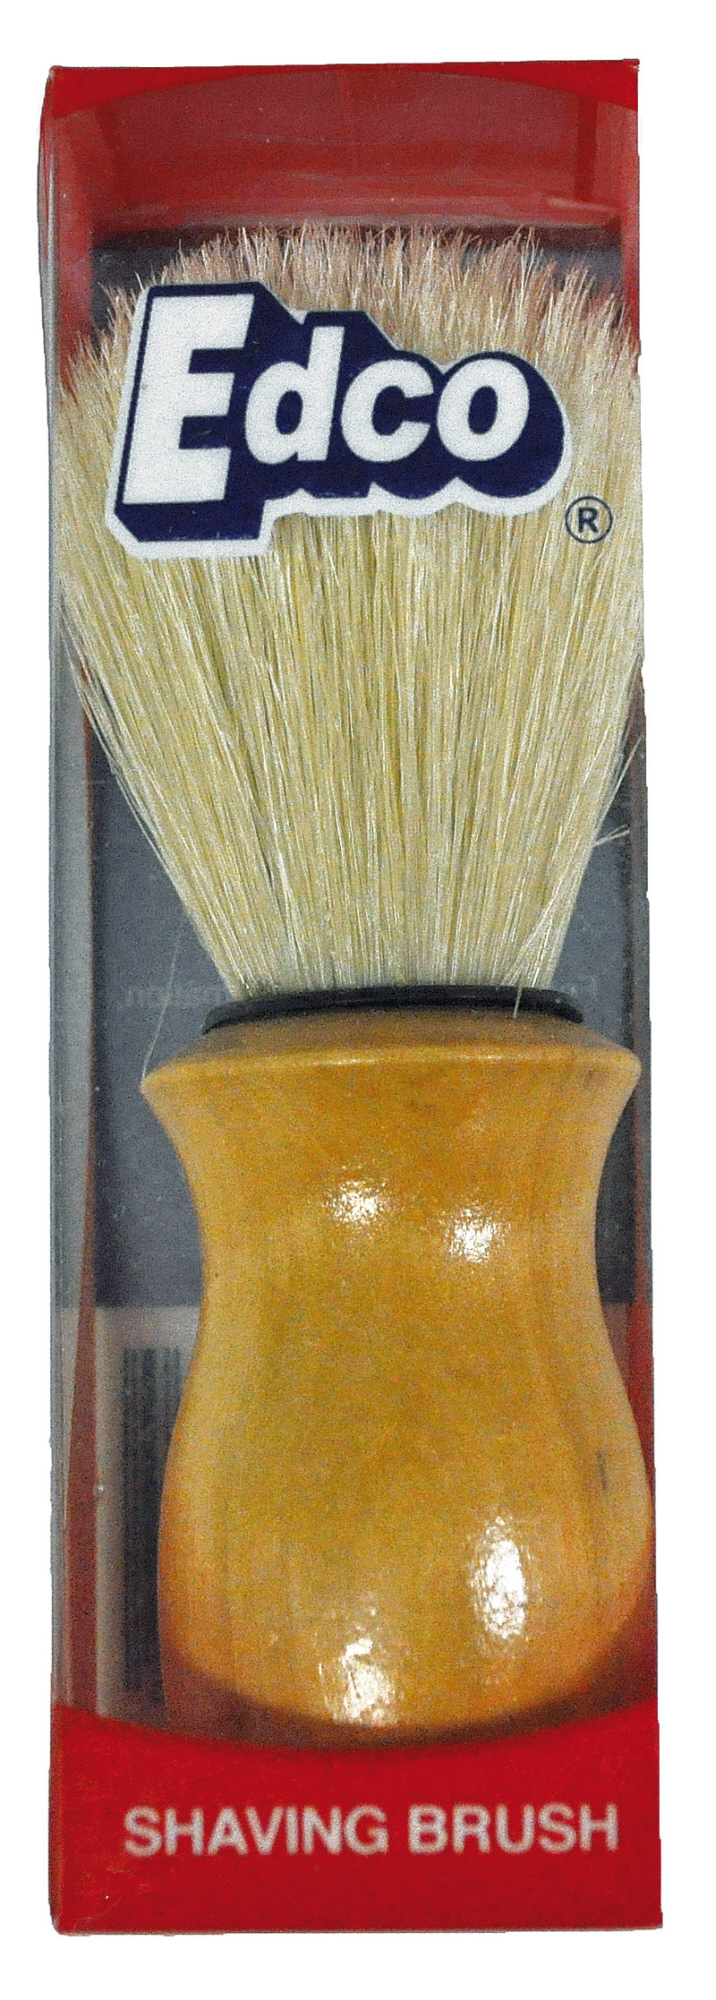 10824-edco-shave-brush